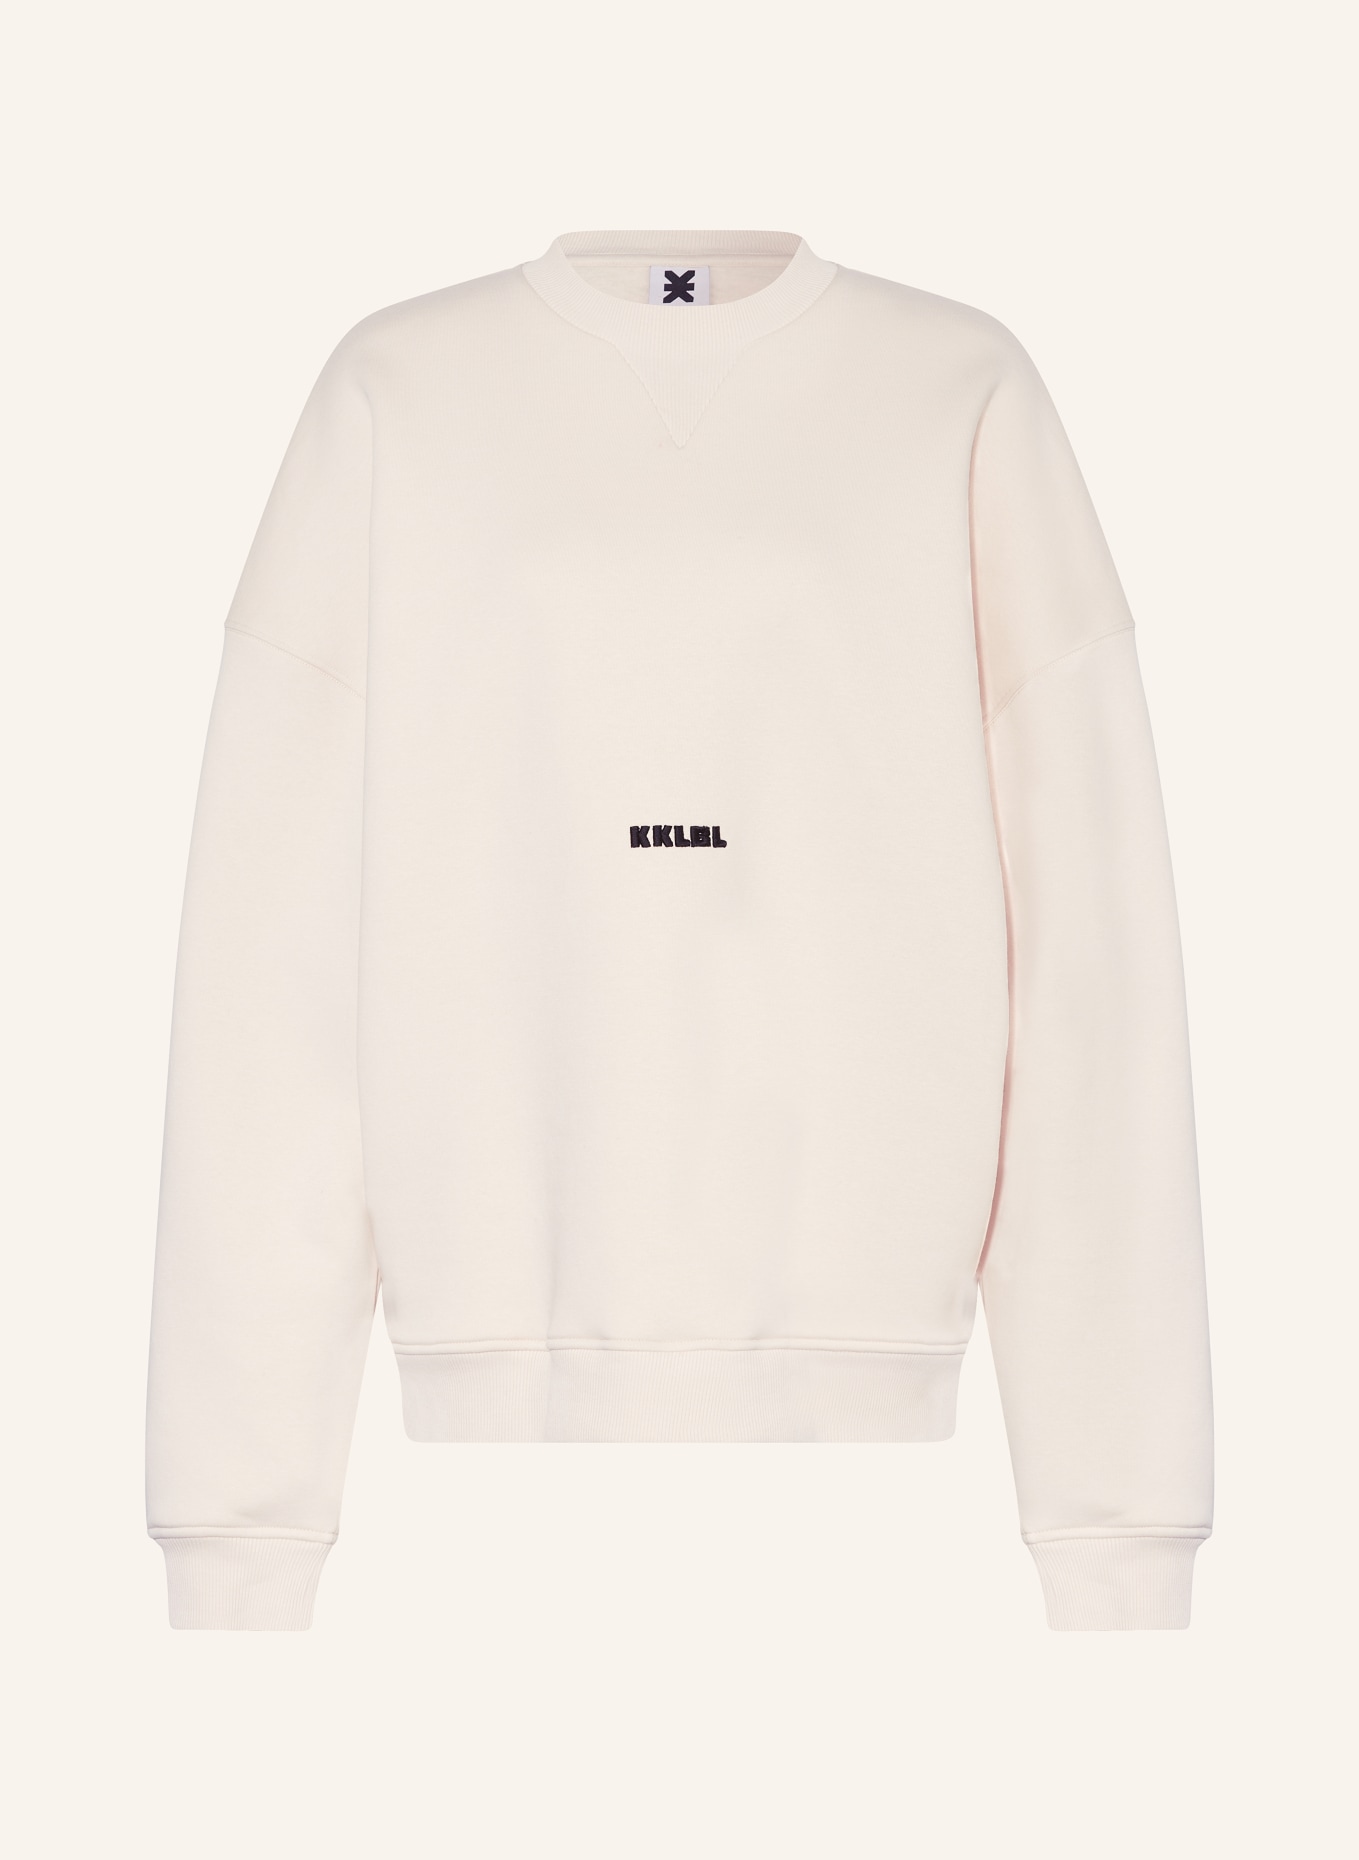 KARO KAUER Oversized-Sweatshirt, Farbe: CREME (Bild 1)